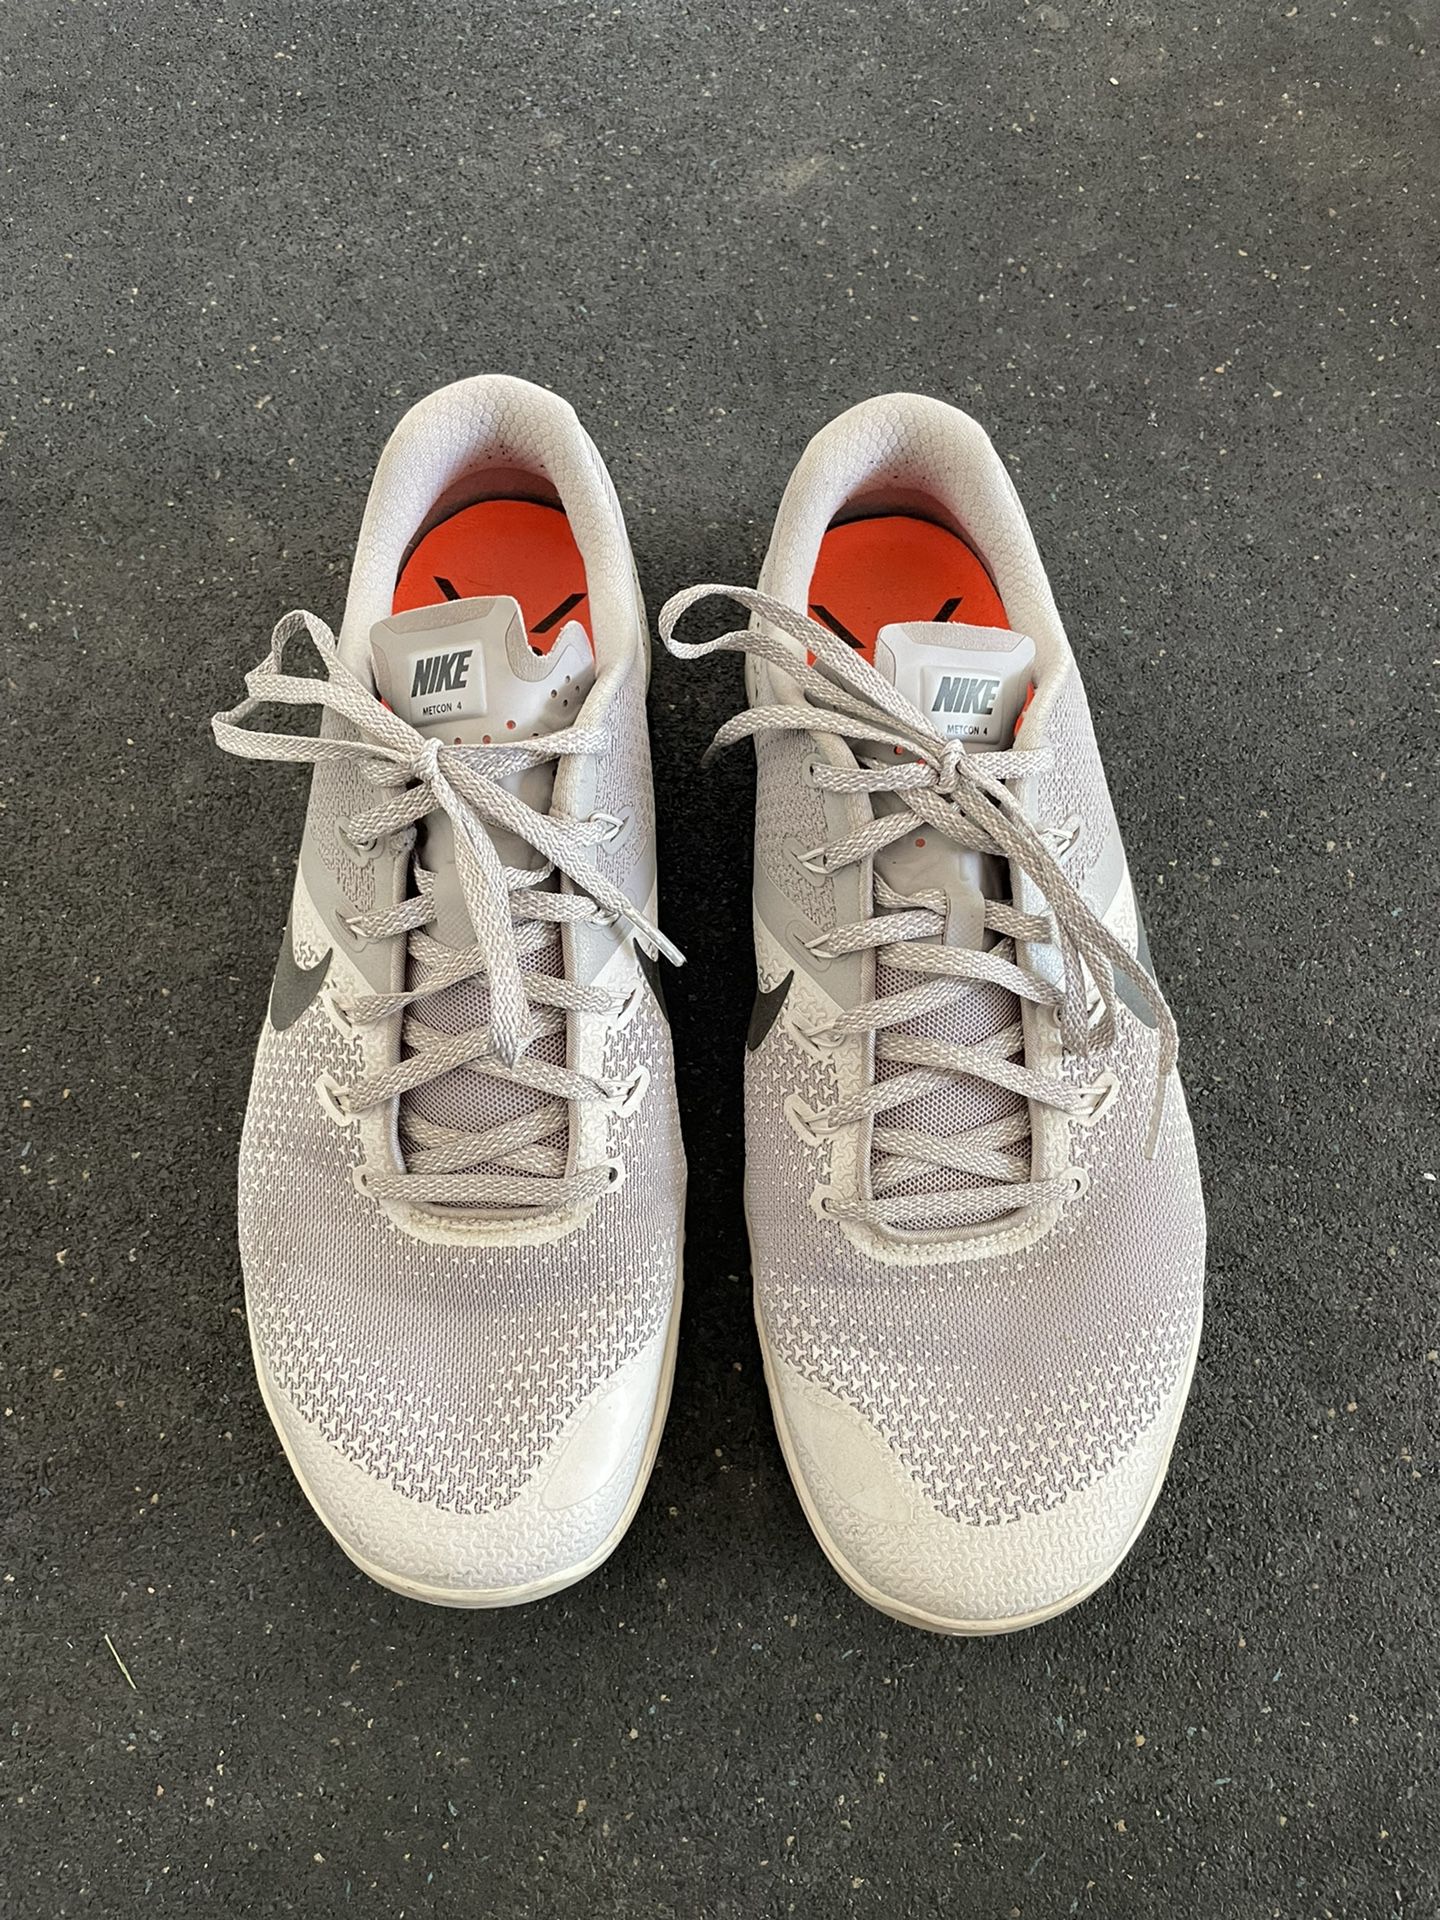 Nike Metcon 4 CrossFit Shoes for Sale in Visalia, CA